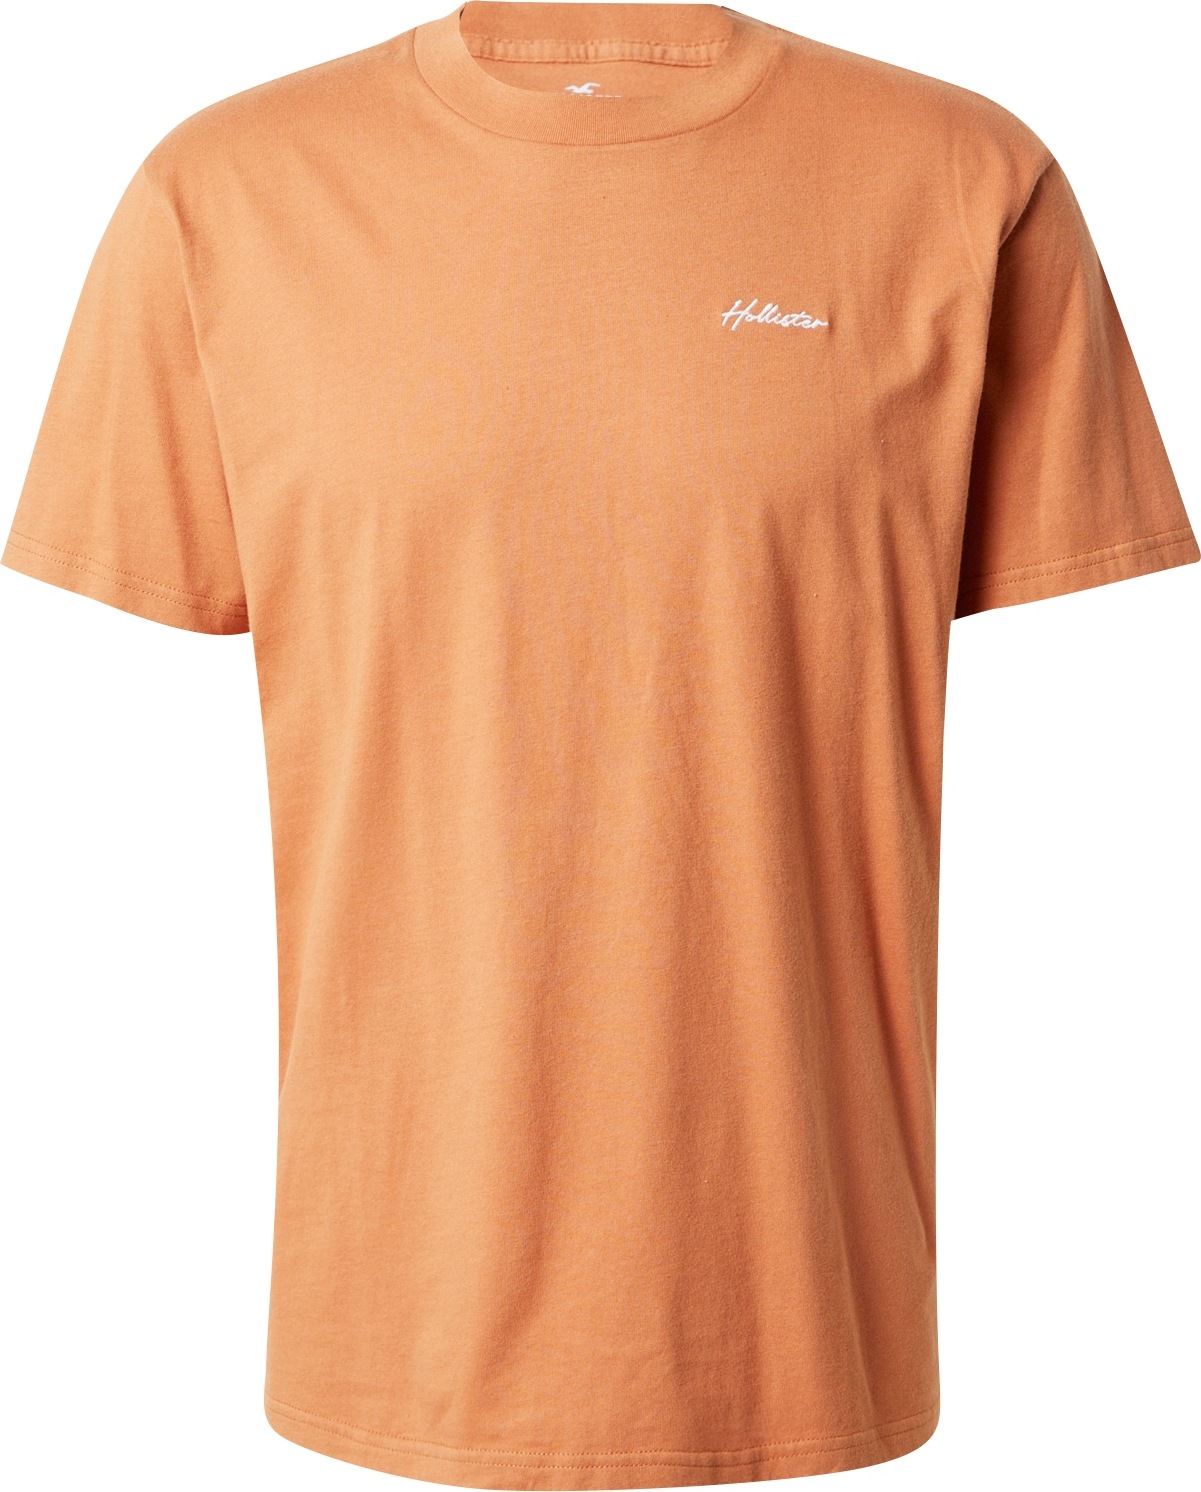 Tričko Hollister oranžová / bílá